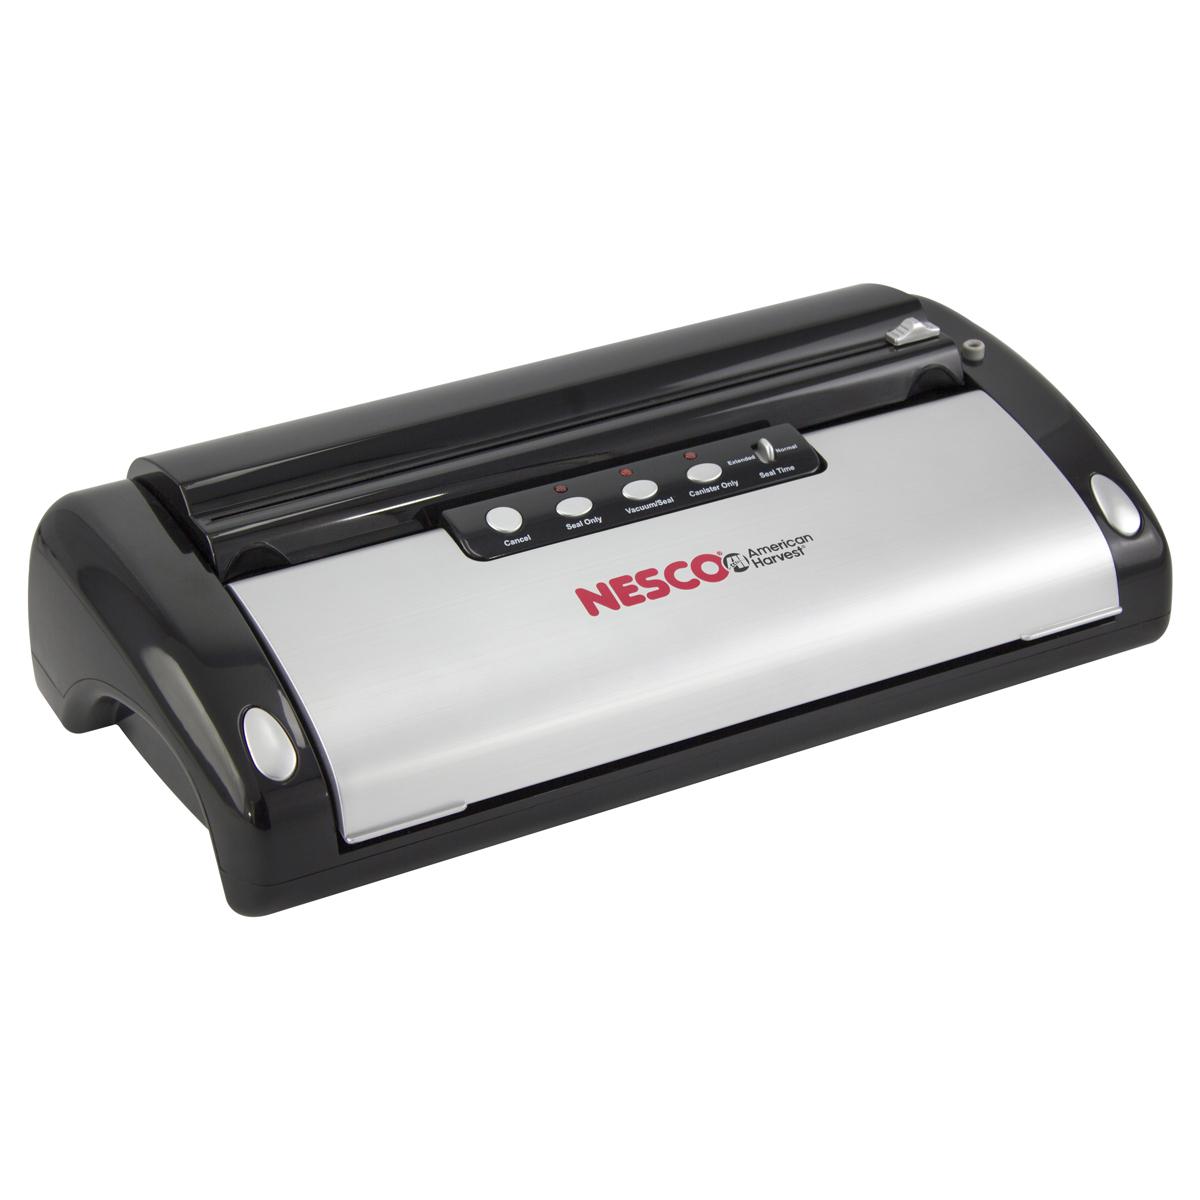 Nesco VS-02 Food Vacuum Sealing System with Bag Starter Kit for $34.98